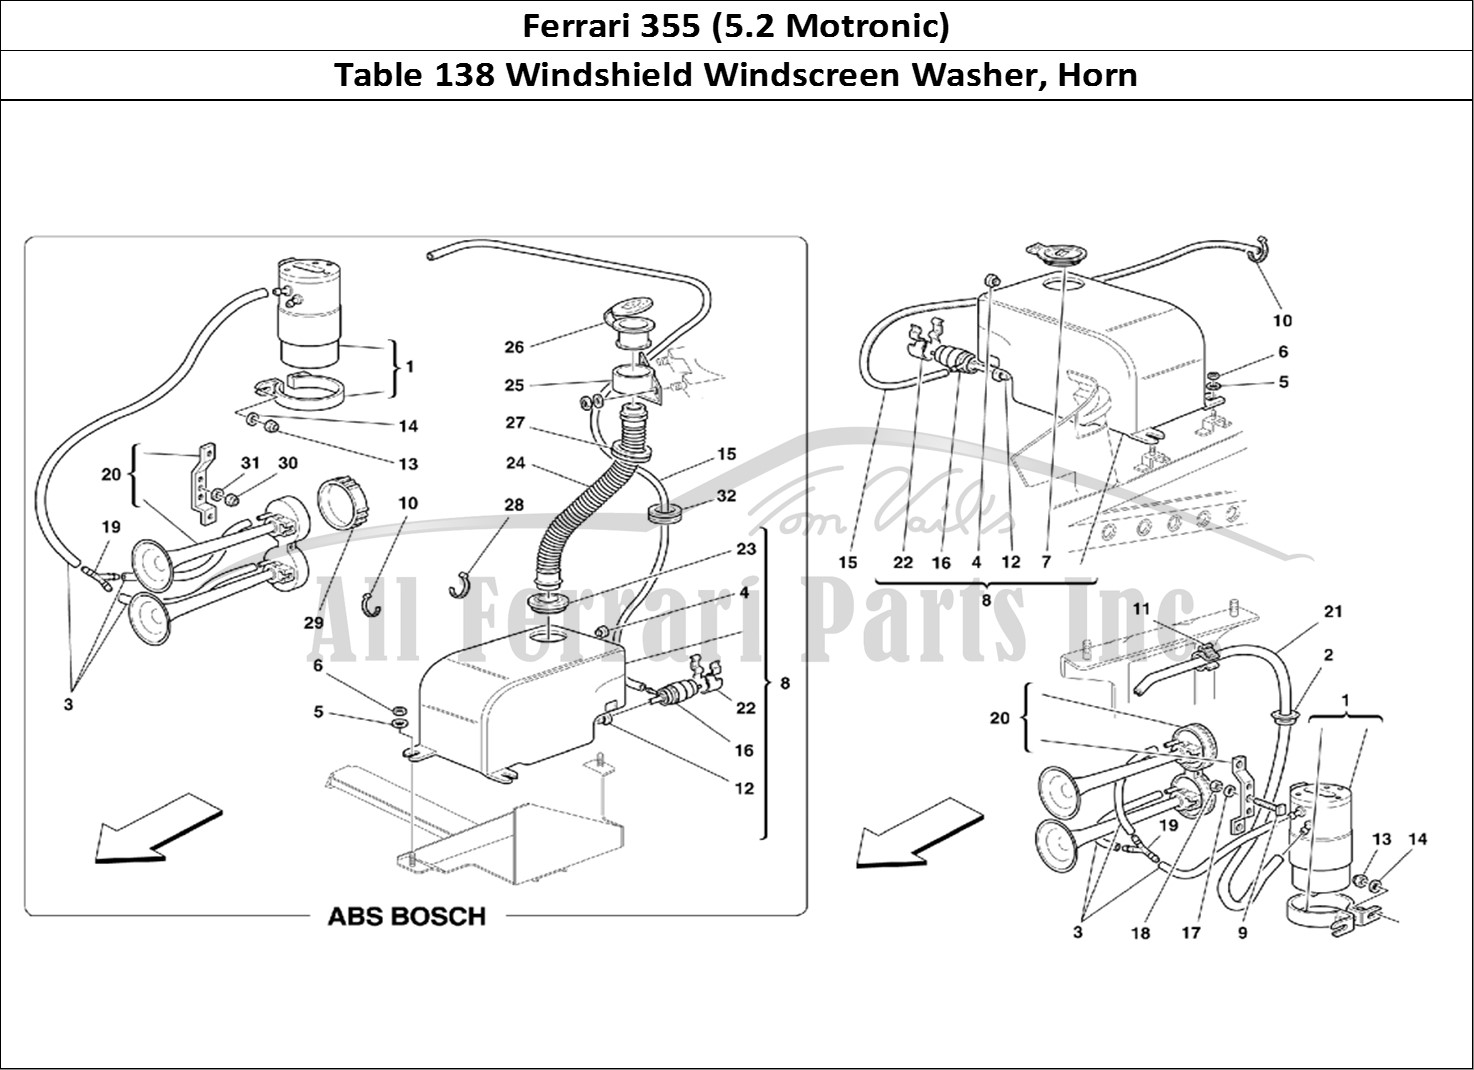 Ferrari Parts Ferrari 355 (5.2 Motronic) Page 138 Glass Washer and Horns